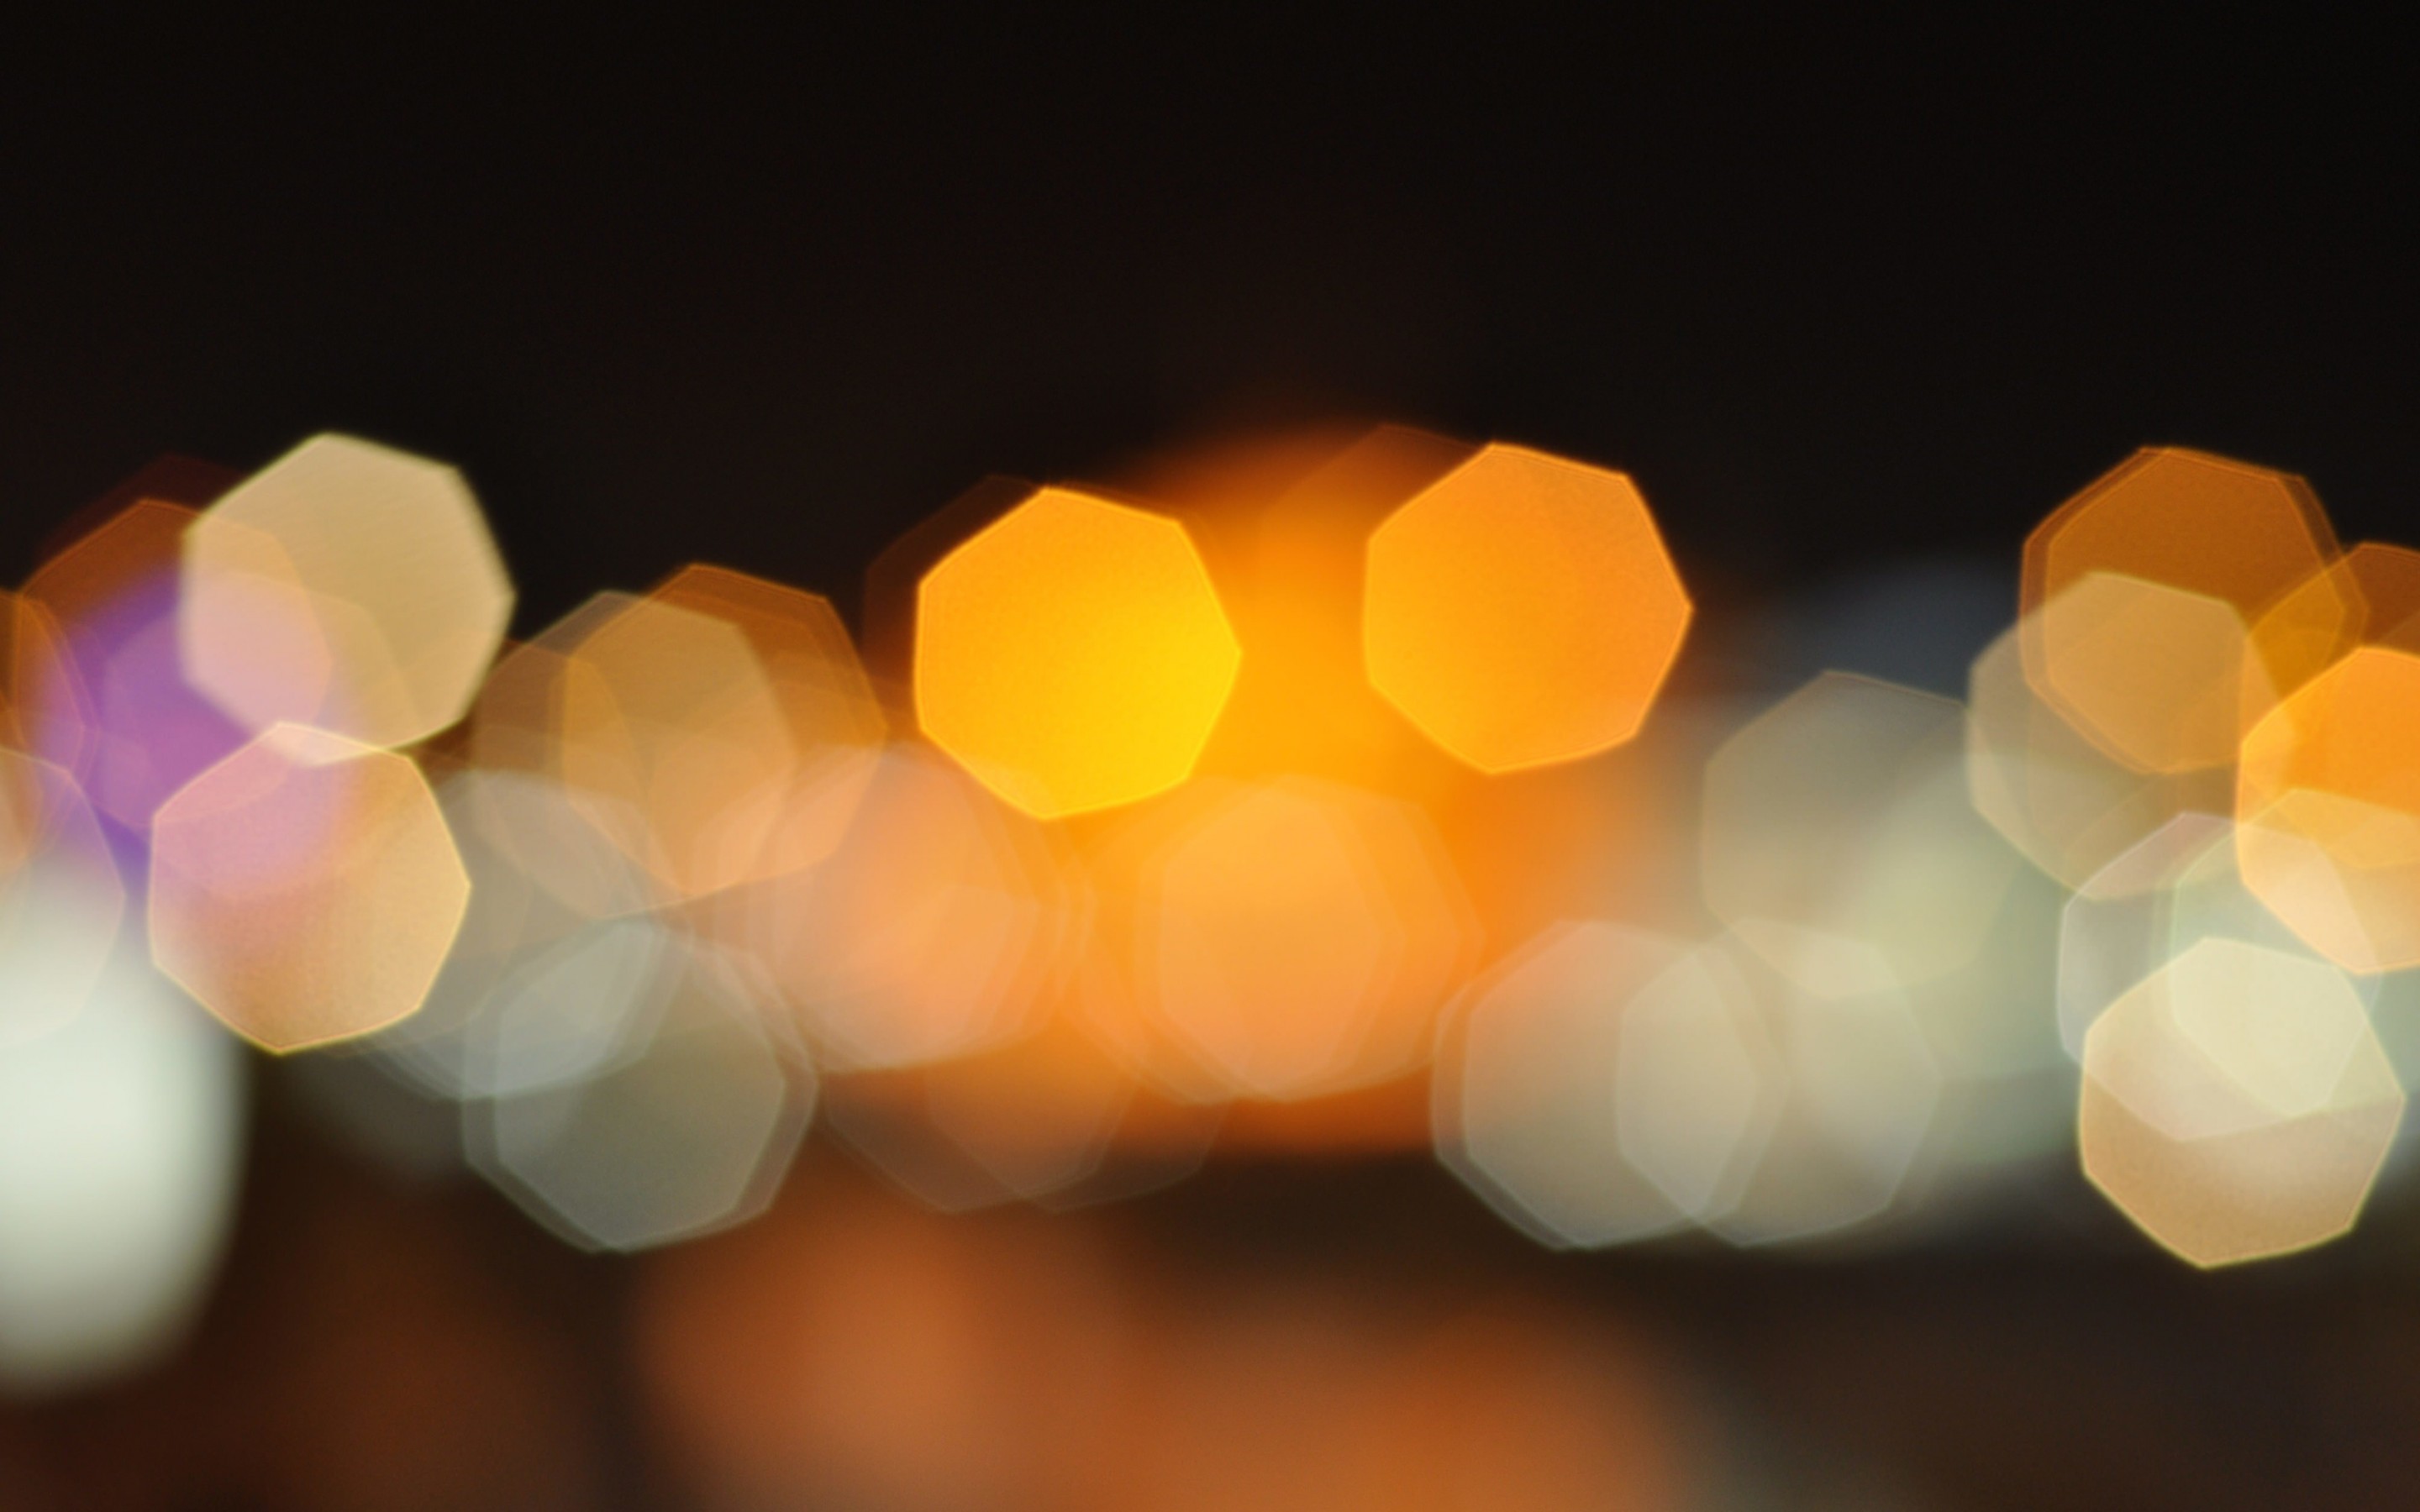 Blurred City Lights Wallpaper for Desktop 2880x1800